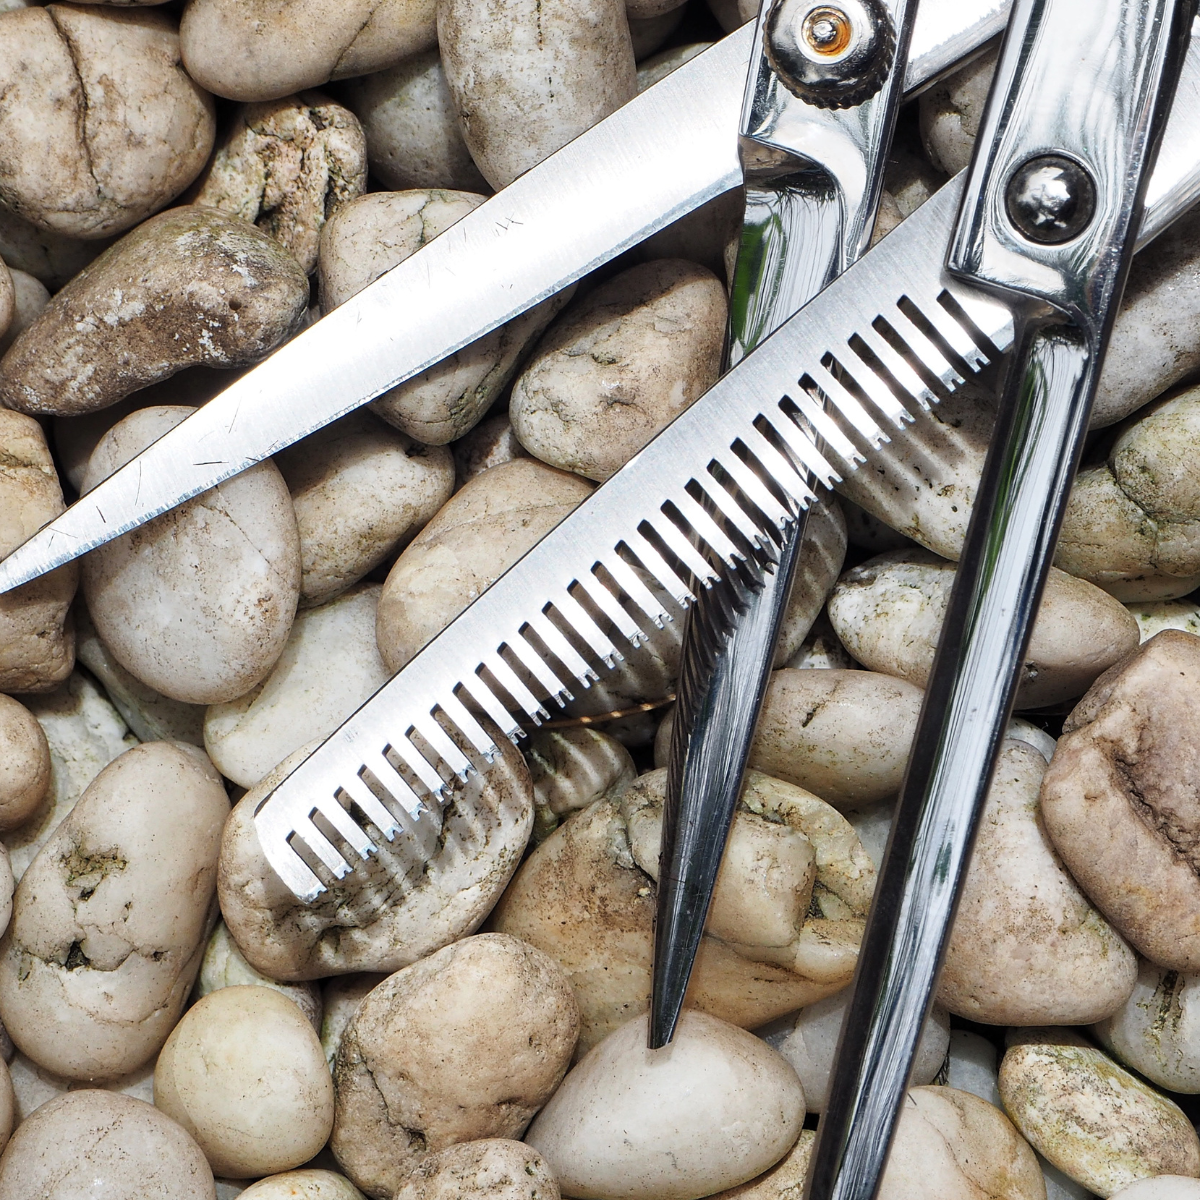 Saki Shears Katana Hair Cutting Scissors for Professionals - Japanese Hair  Shears with Black Finish - 6 Inches 